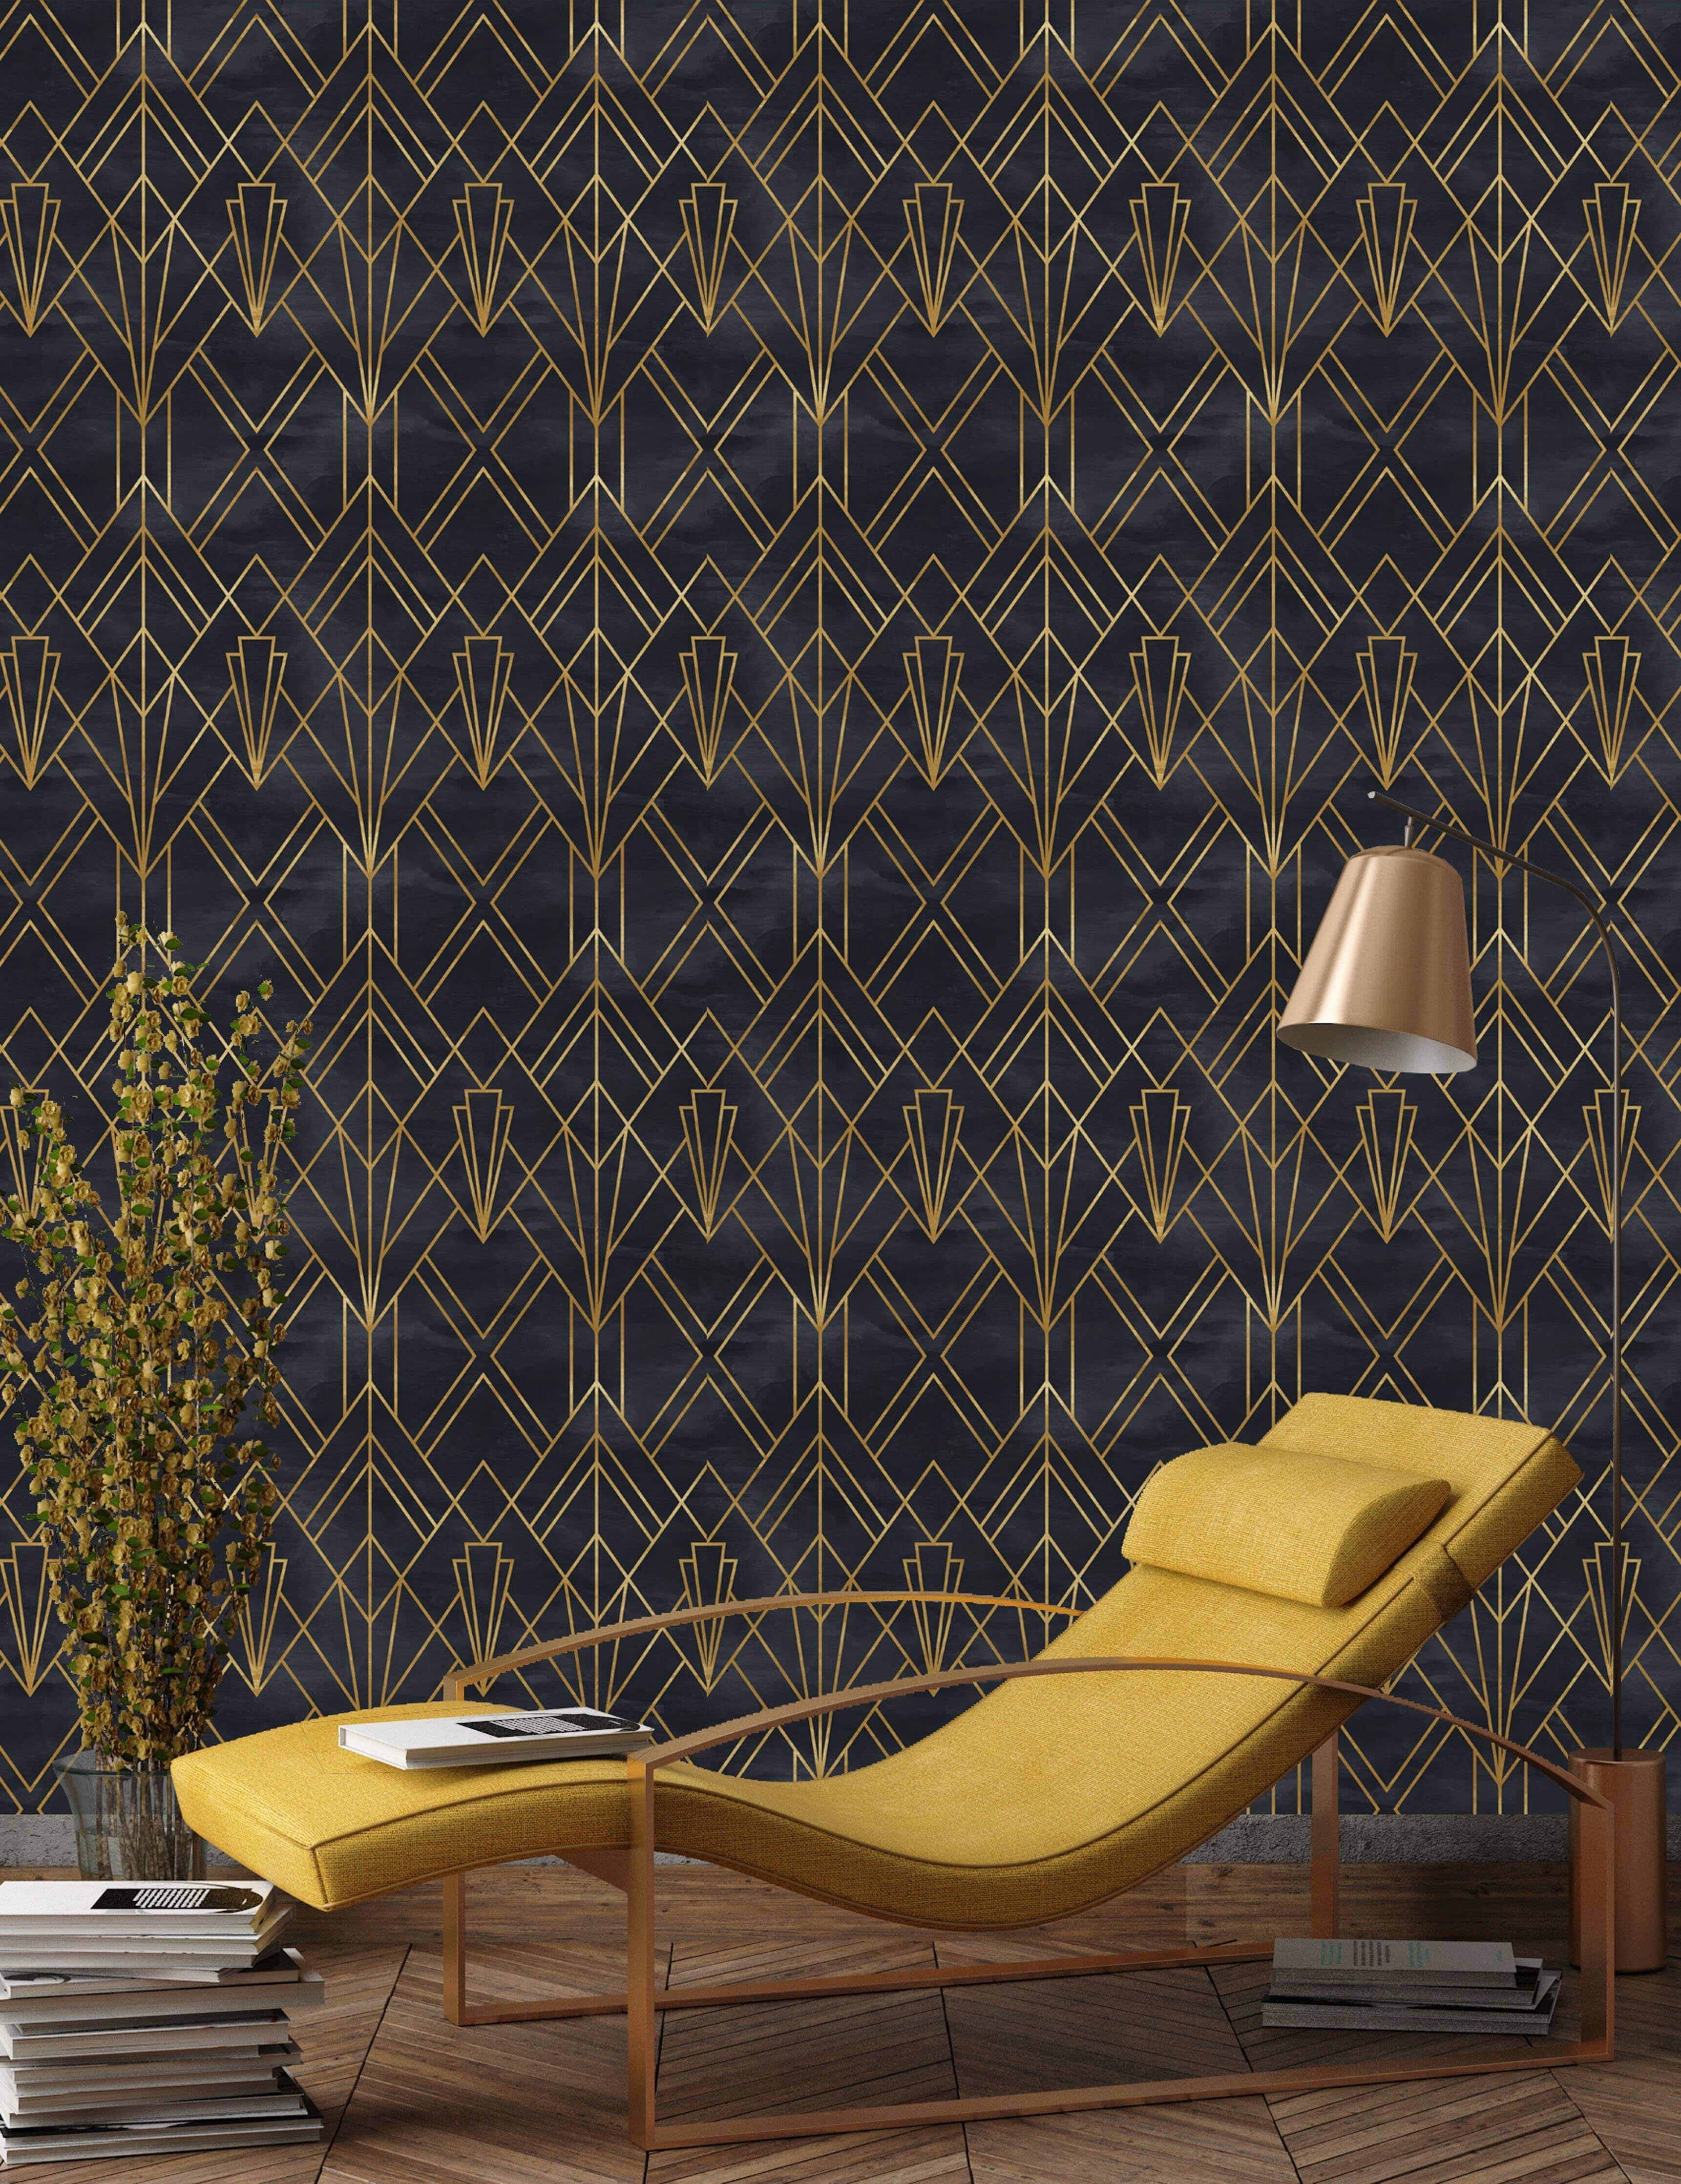 Everly Quinn Leanora Peel & Stick Geometric Wallpaper | Wayfair